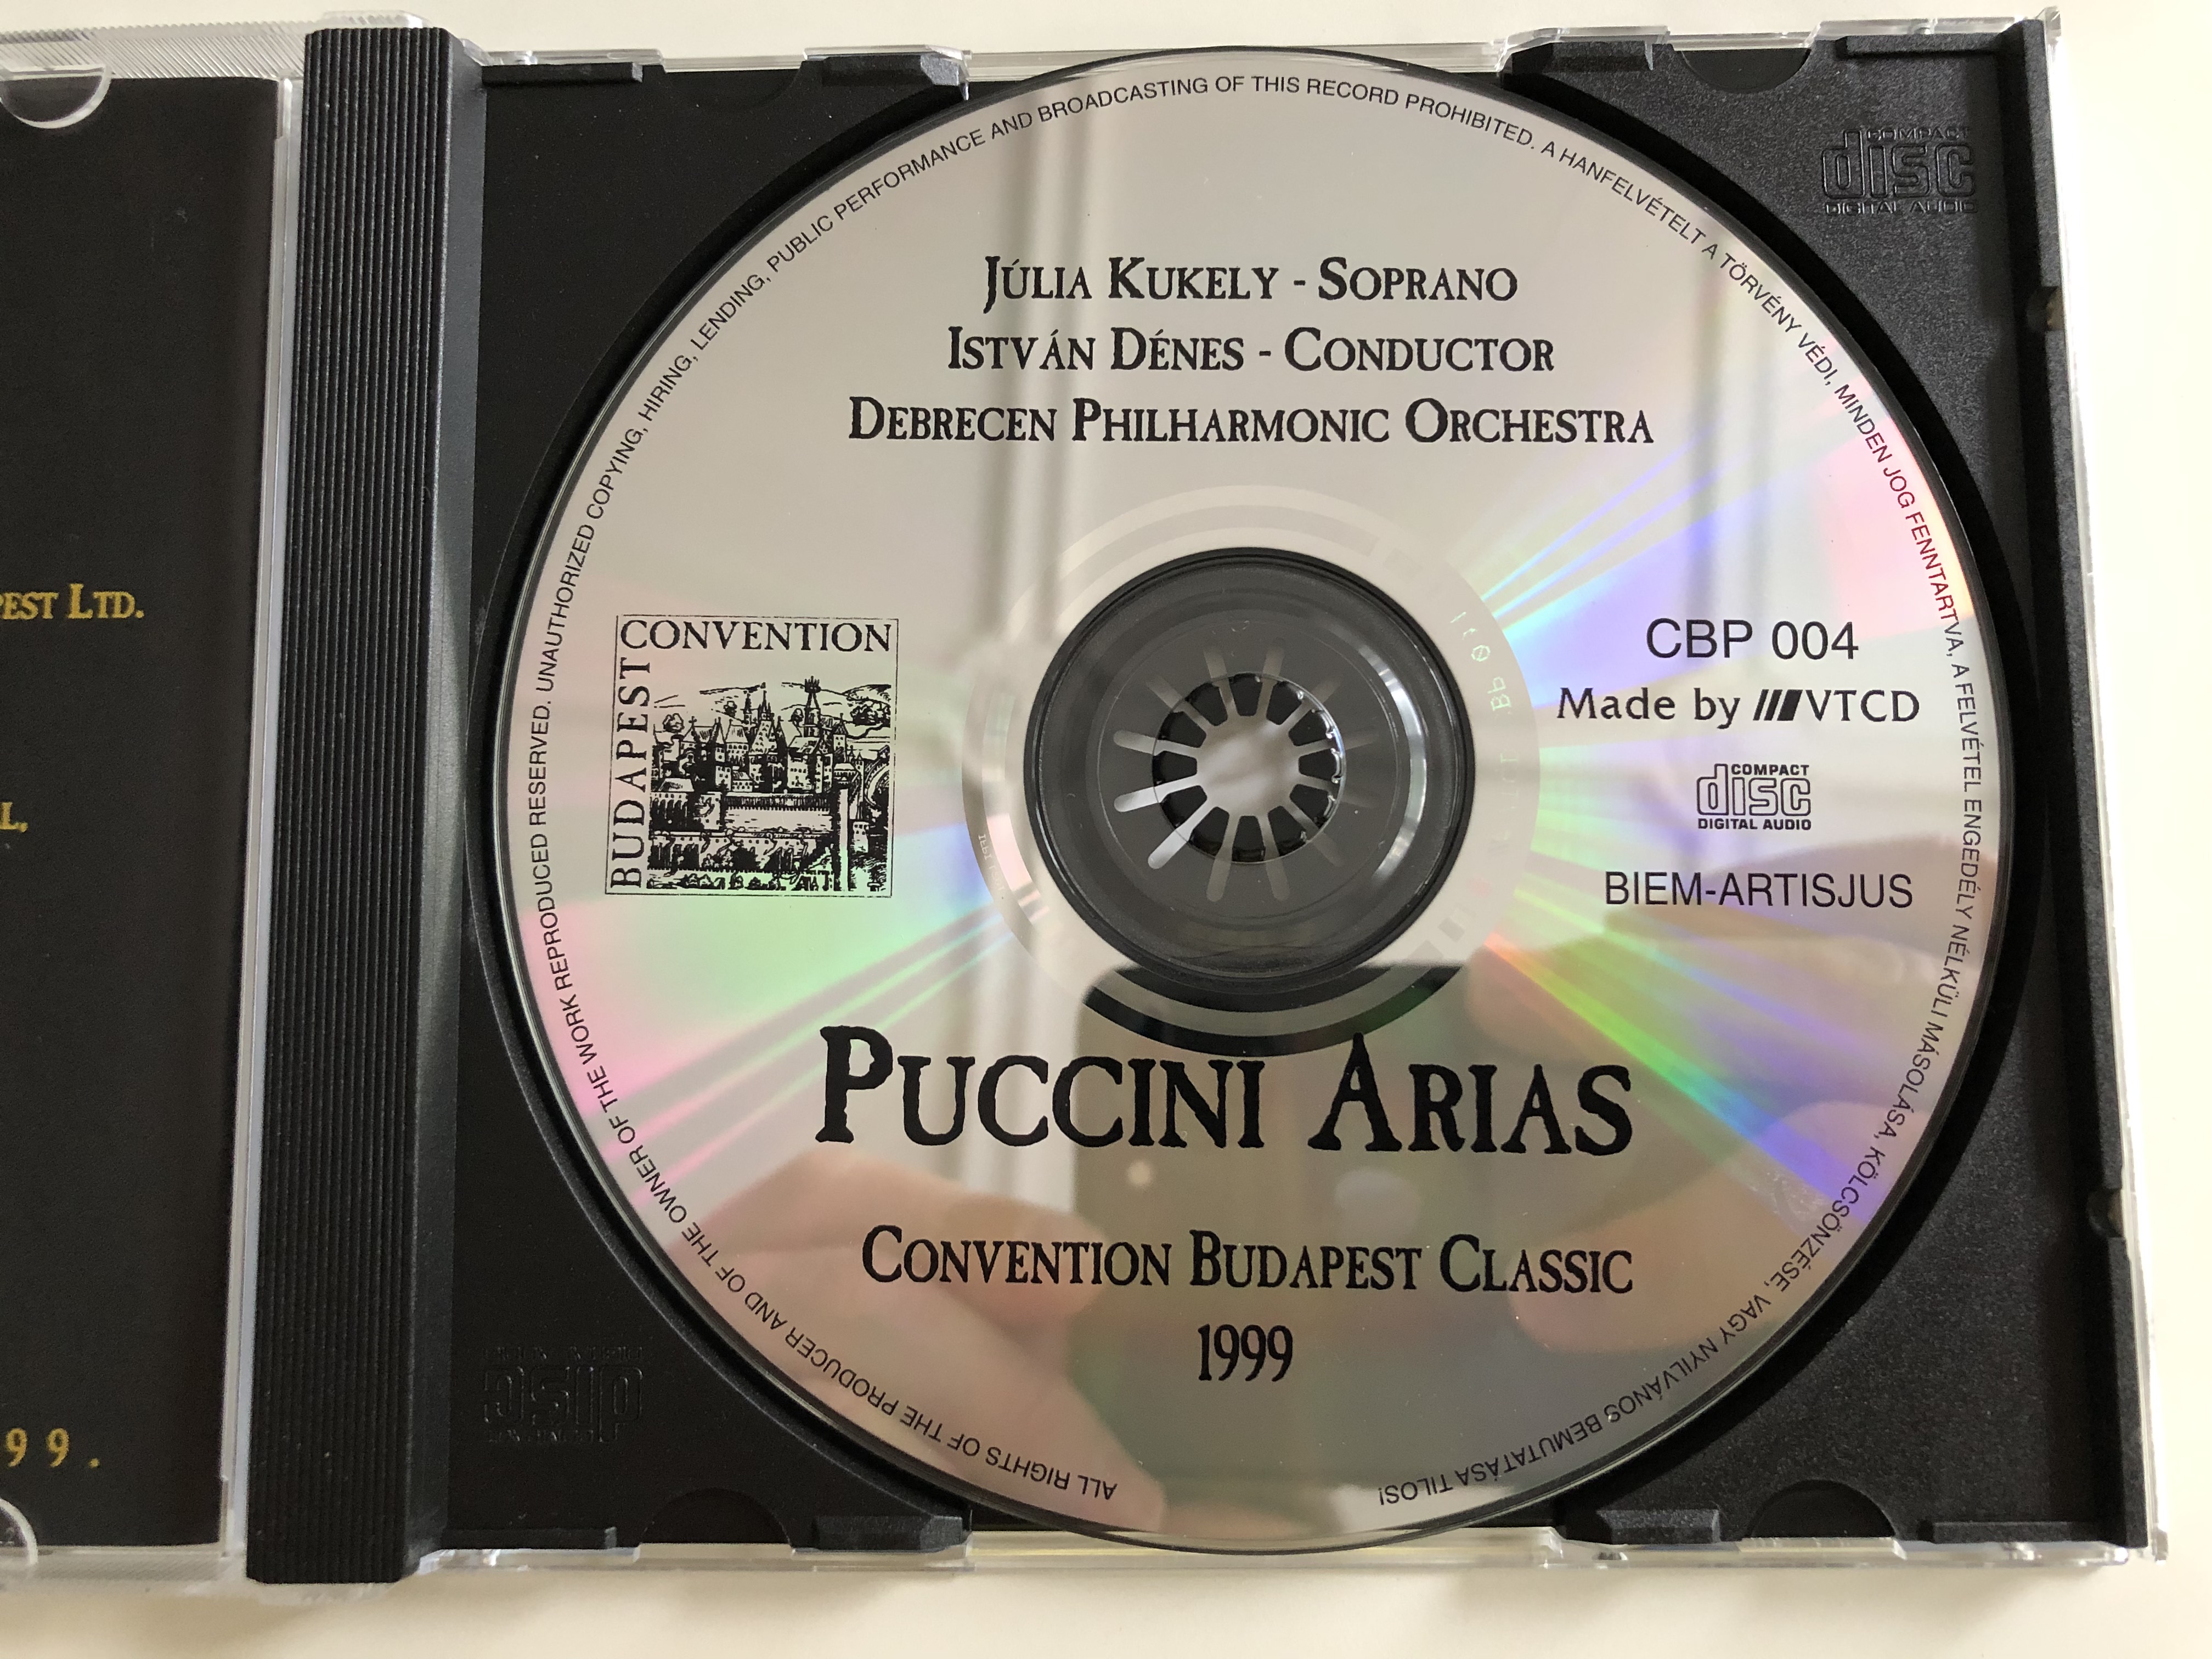 julia-kukely-puccini-arias-debrecen-philharmonic-orchestra-conducted-istvan-denes-convention-budapest-classic-1999-audio-cd-cbp-004-7-.jpg